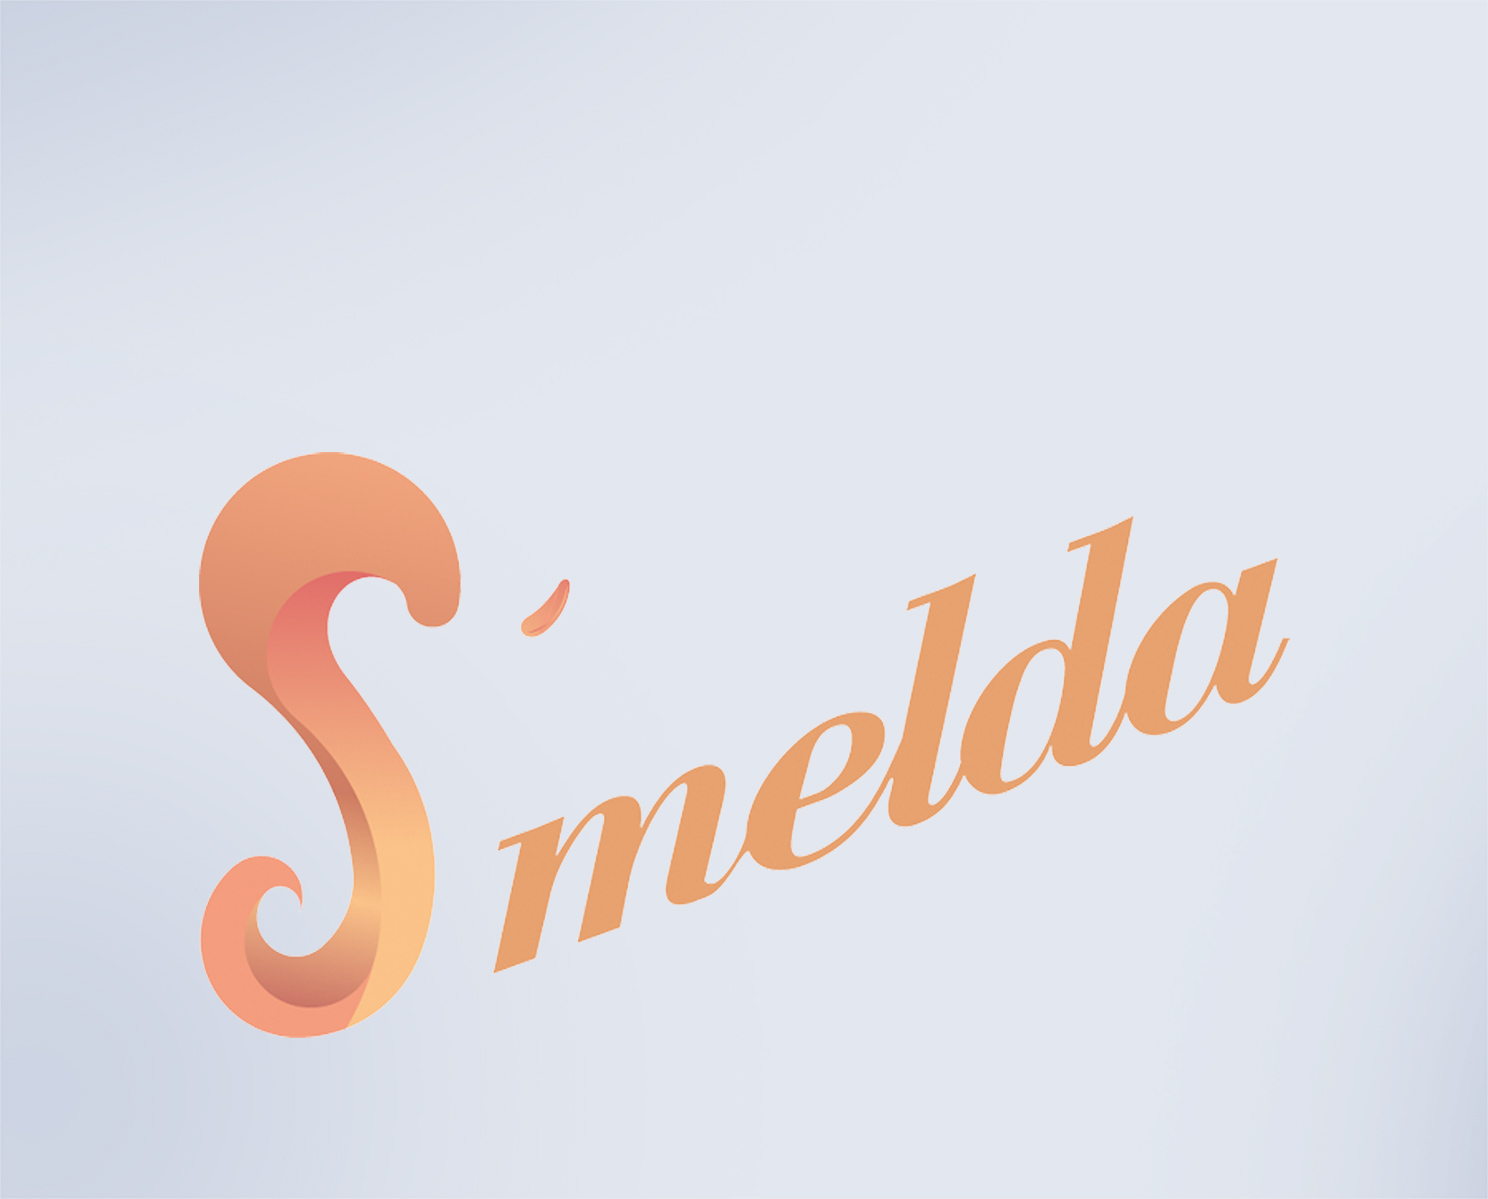 s'melda